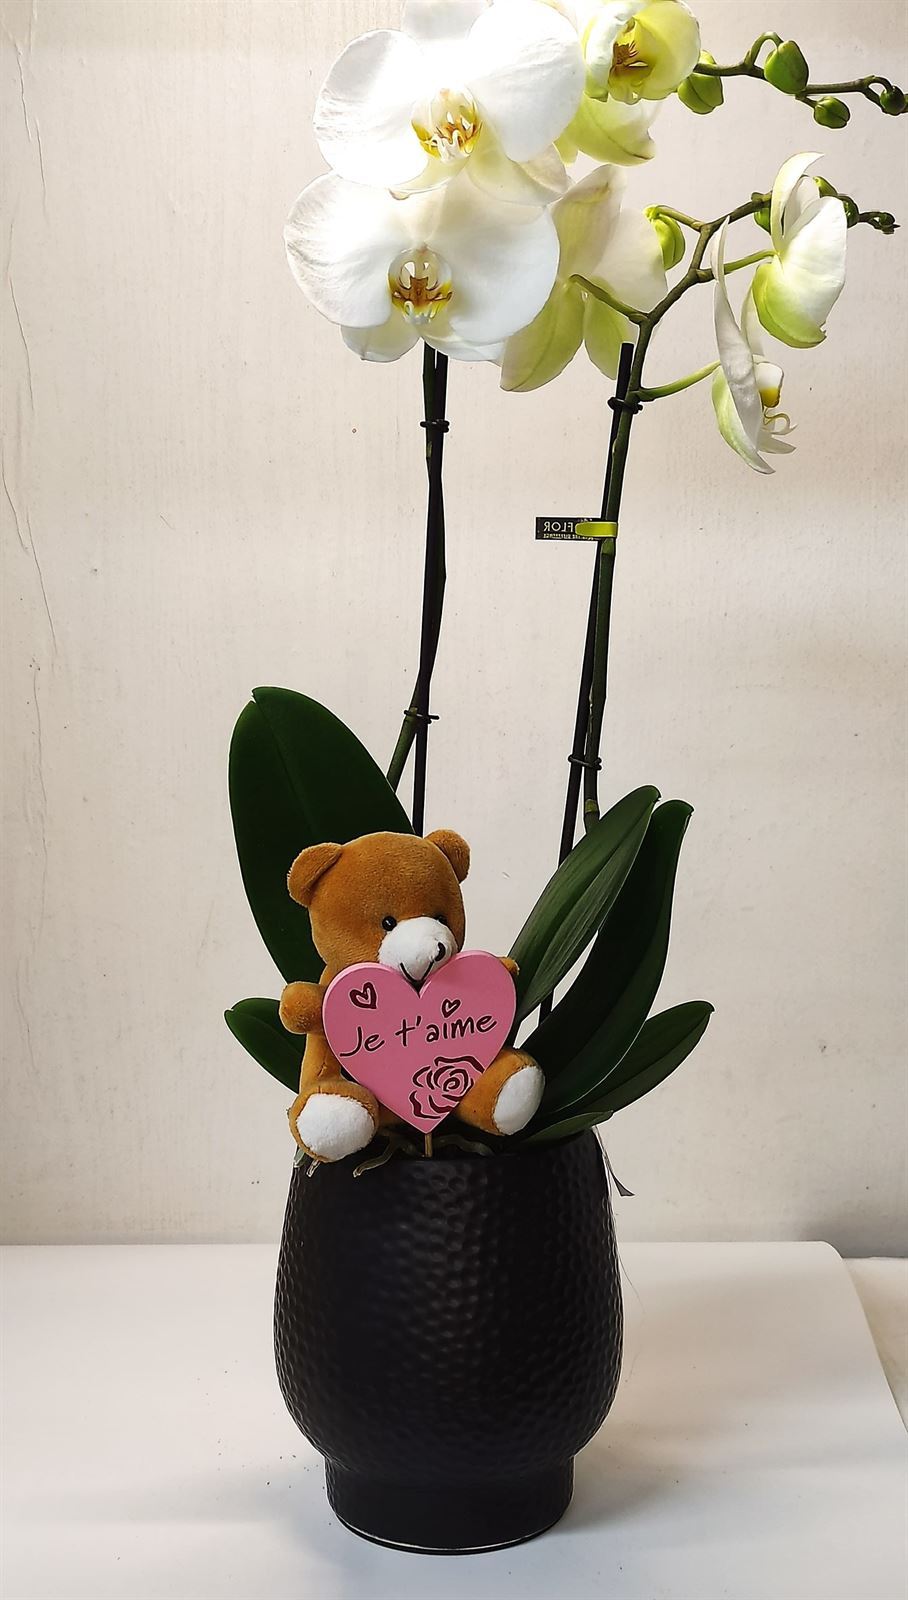 Maistro nera (orquídea - Imagen 1